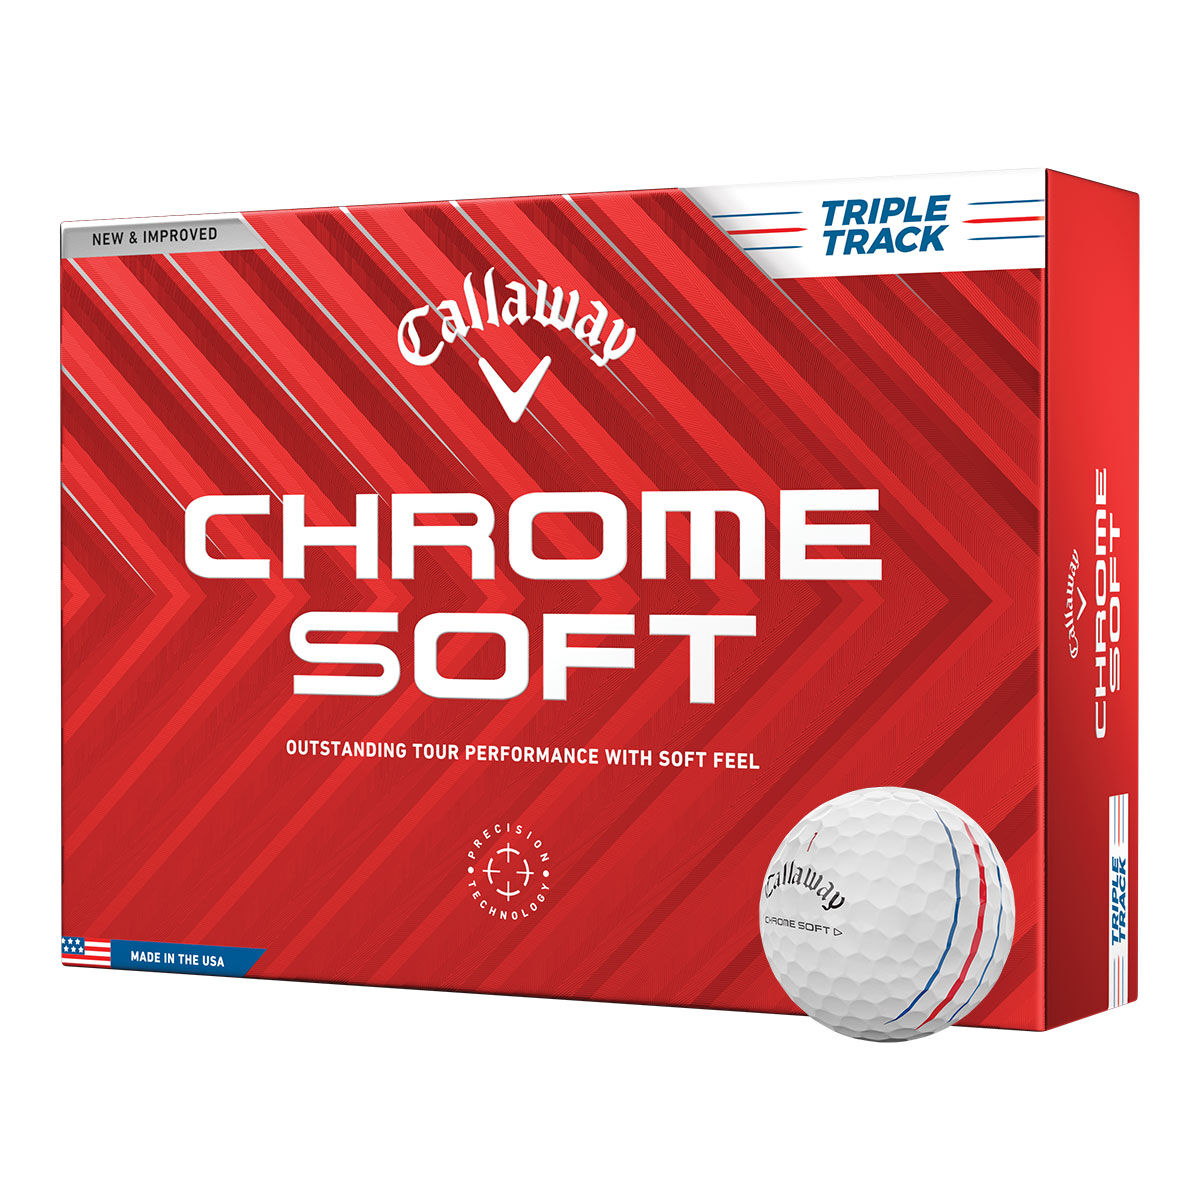 Callaway Chrome Soft Triple Track 12 Golf Ball Pack, Mens, White | American Golf von Callaway Golf